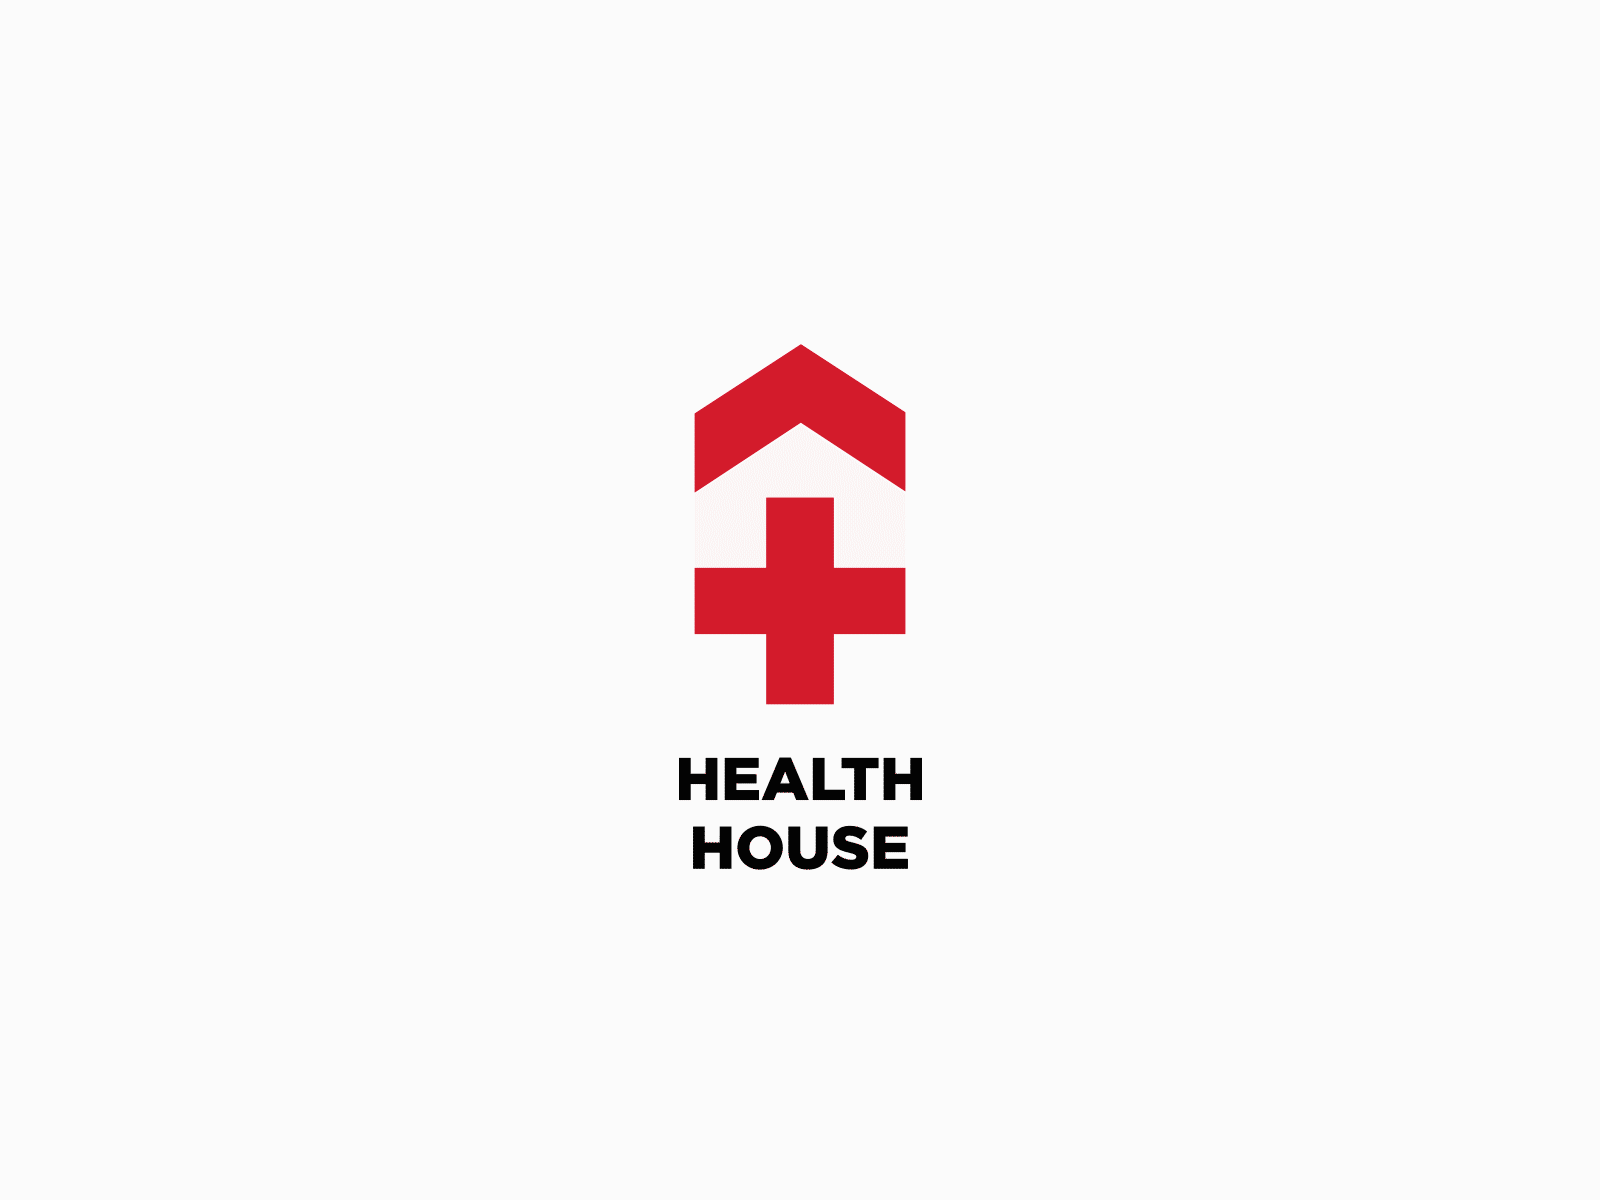 Health House logo animation